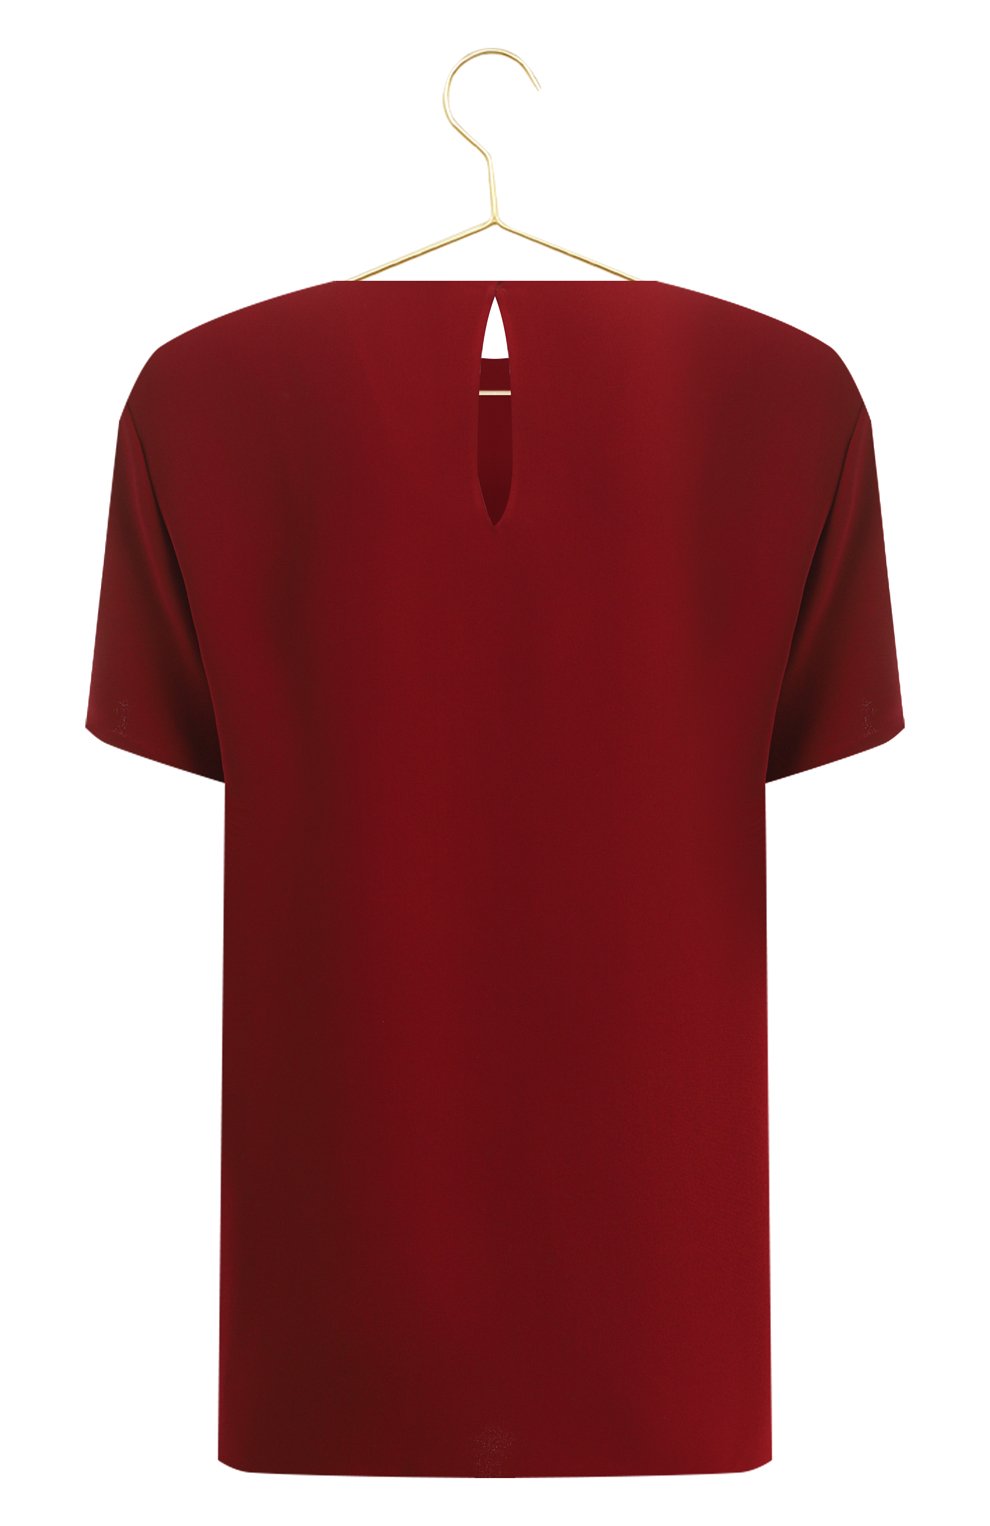 Шелковая блузка | Valentino | Бордовый - 2